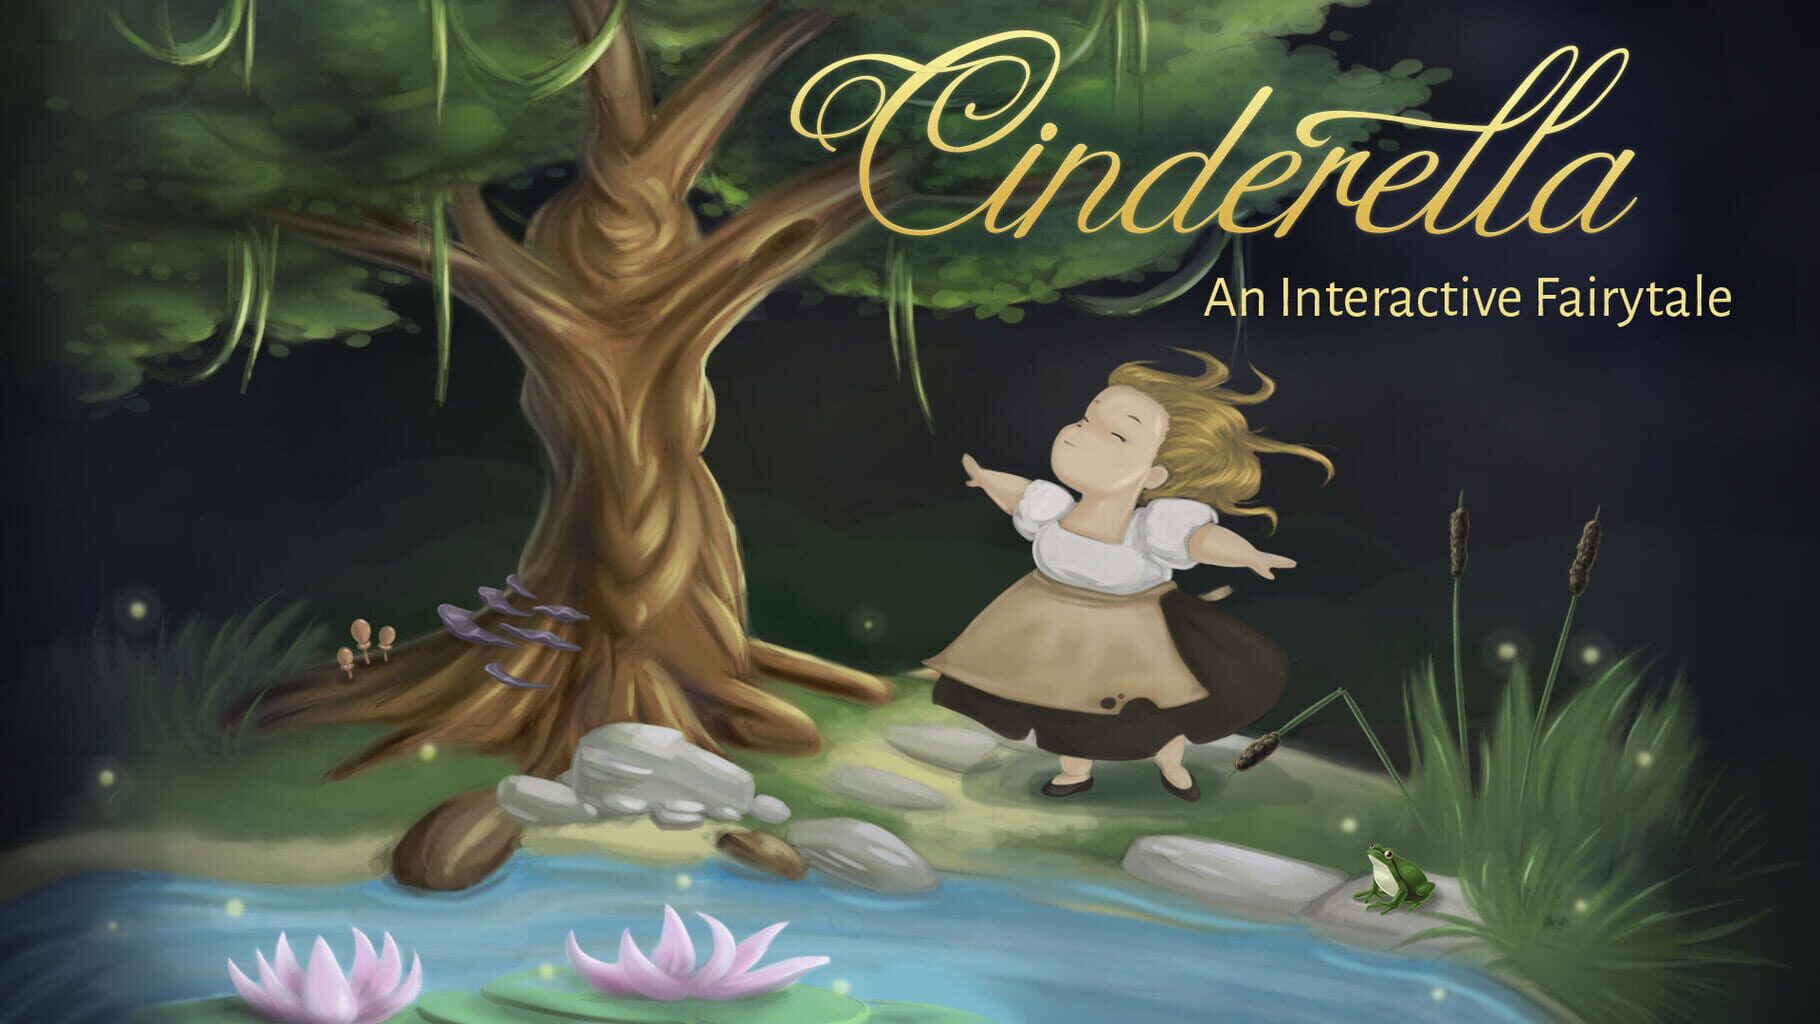 Cinderella: An Interactive Fairytale artwork